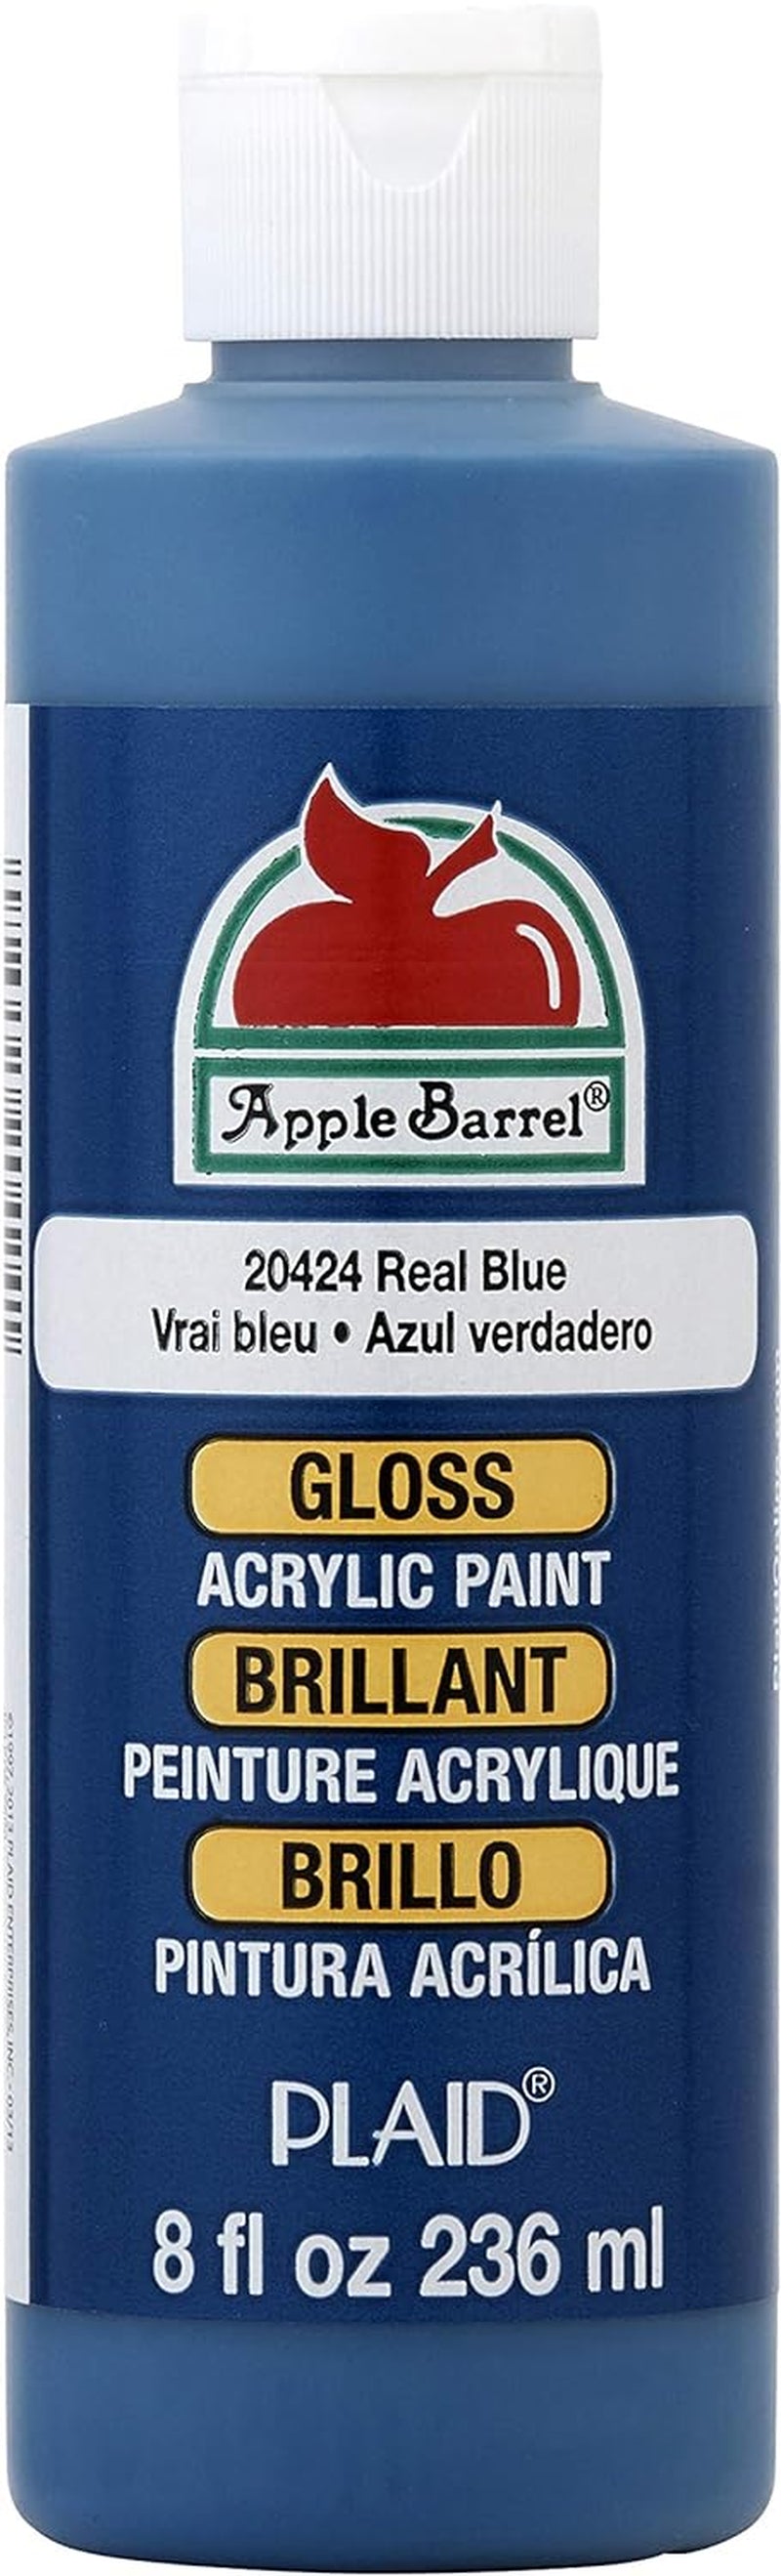 Apple Barrel Acrylic Craft Paint, Gloss Finish, Antique White, 8 fl oz